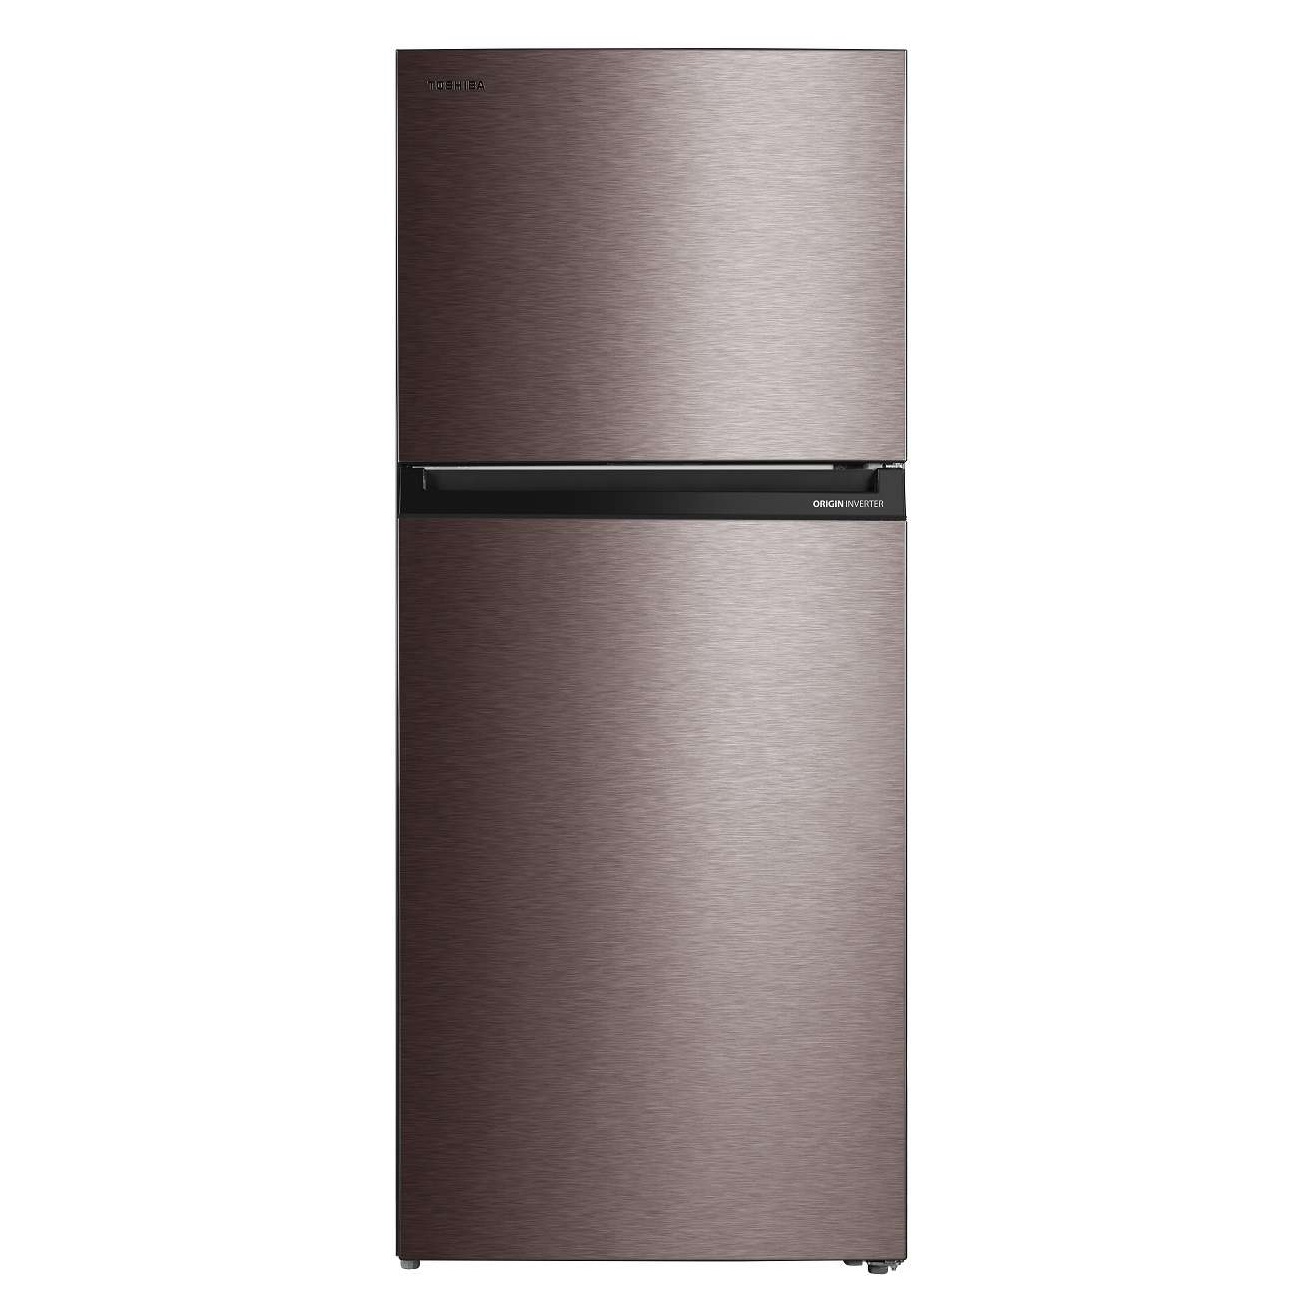 Холодильник Toshiba GR-RT559WE-PMJ(37) коричневый - купить в М.видео, цена на Мегамаркет